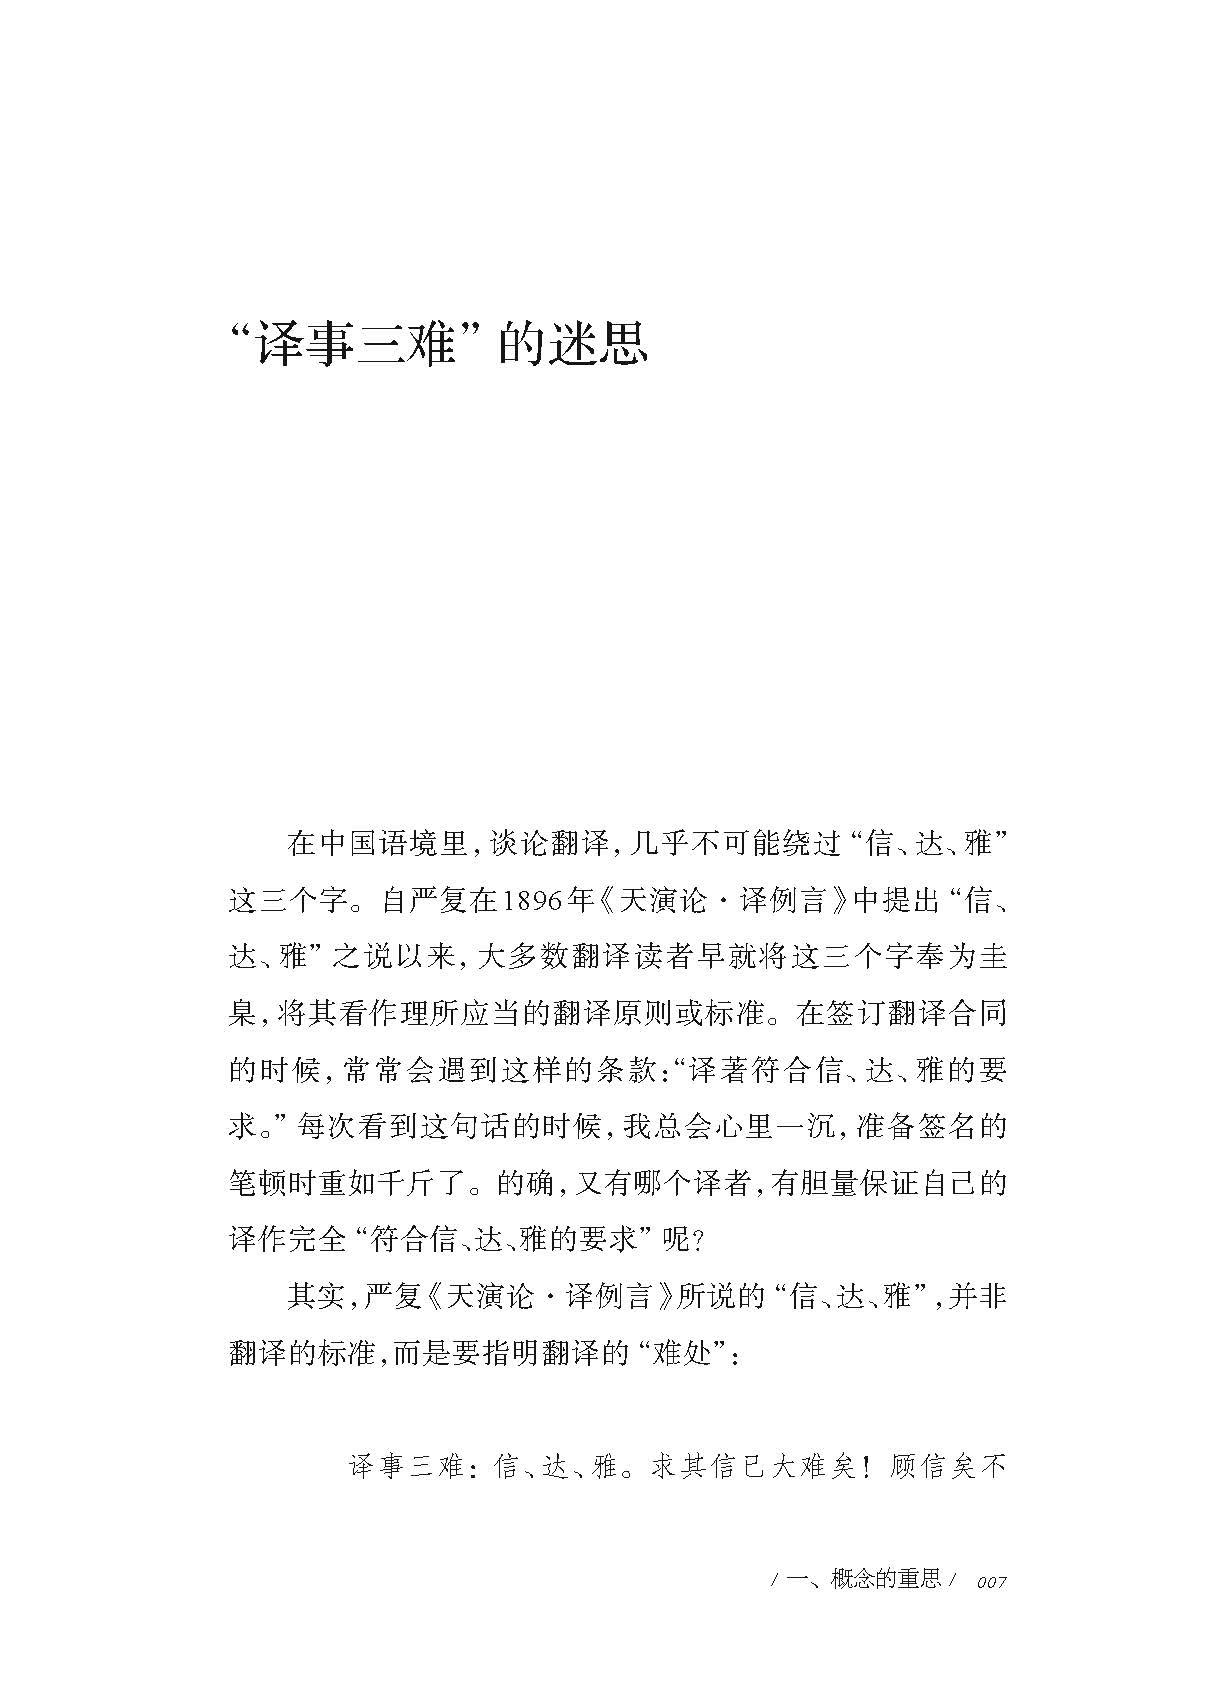 screenshot 王岫庐，《 翻译之镜》-”译事三难“的迷思.jpg